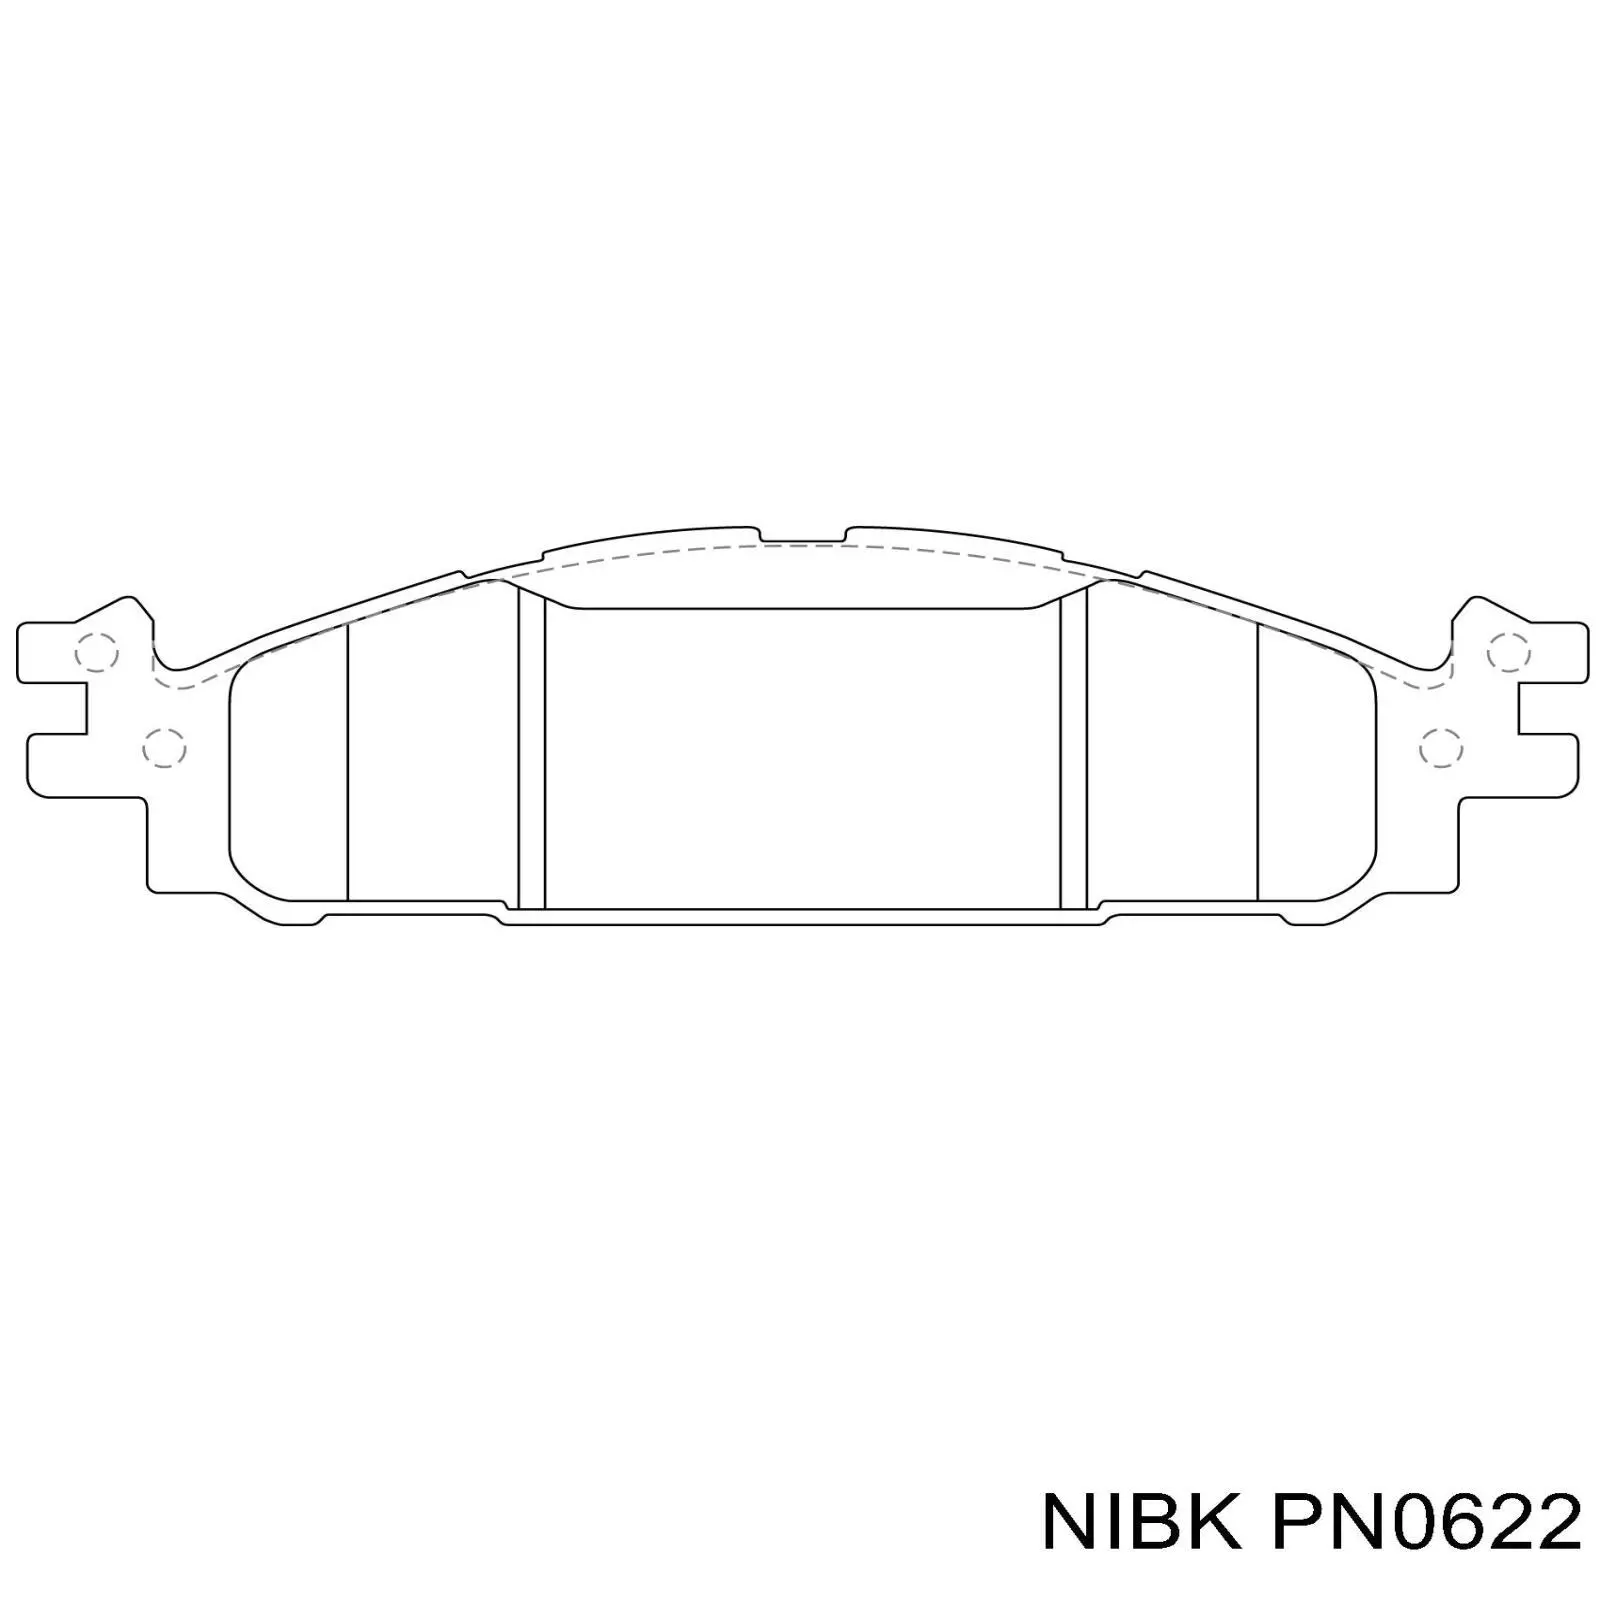 PN0622 Nibk sapatas do freio dianteiras de disco